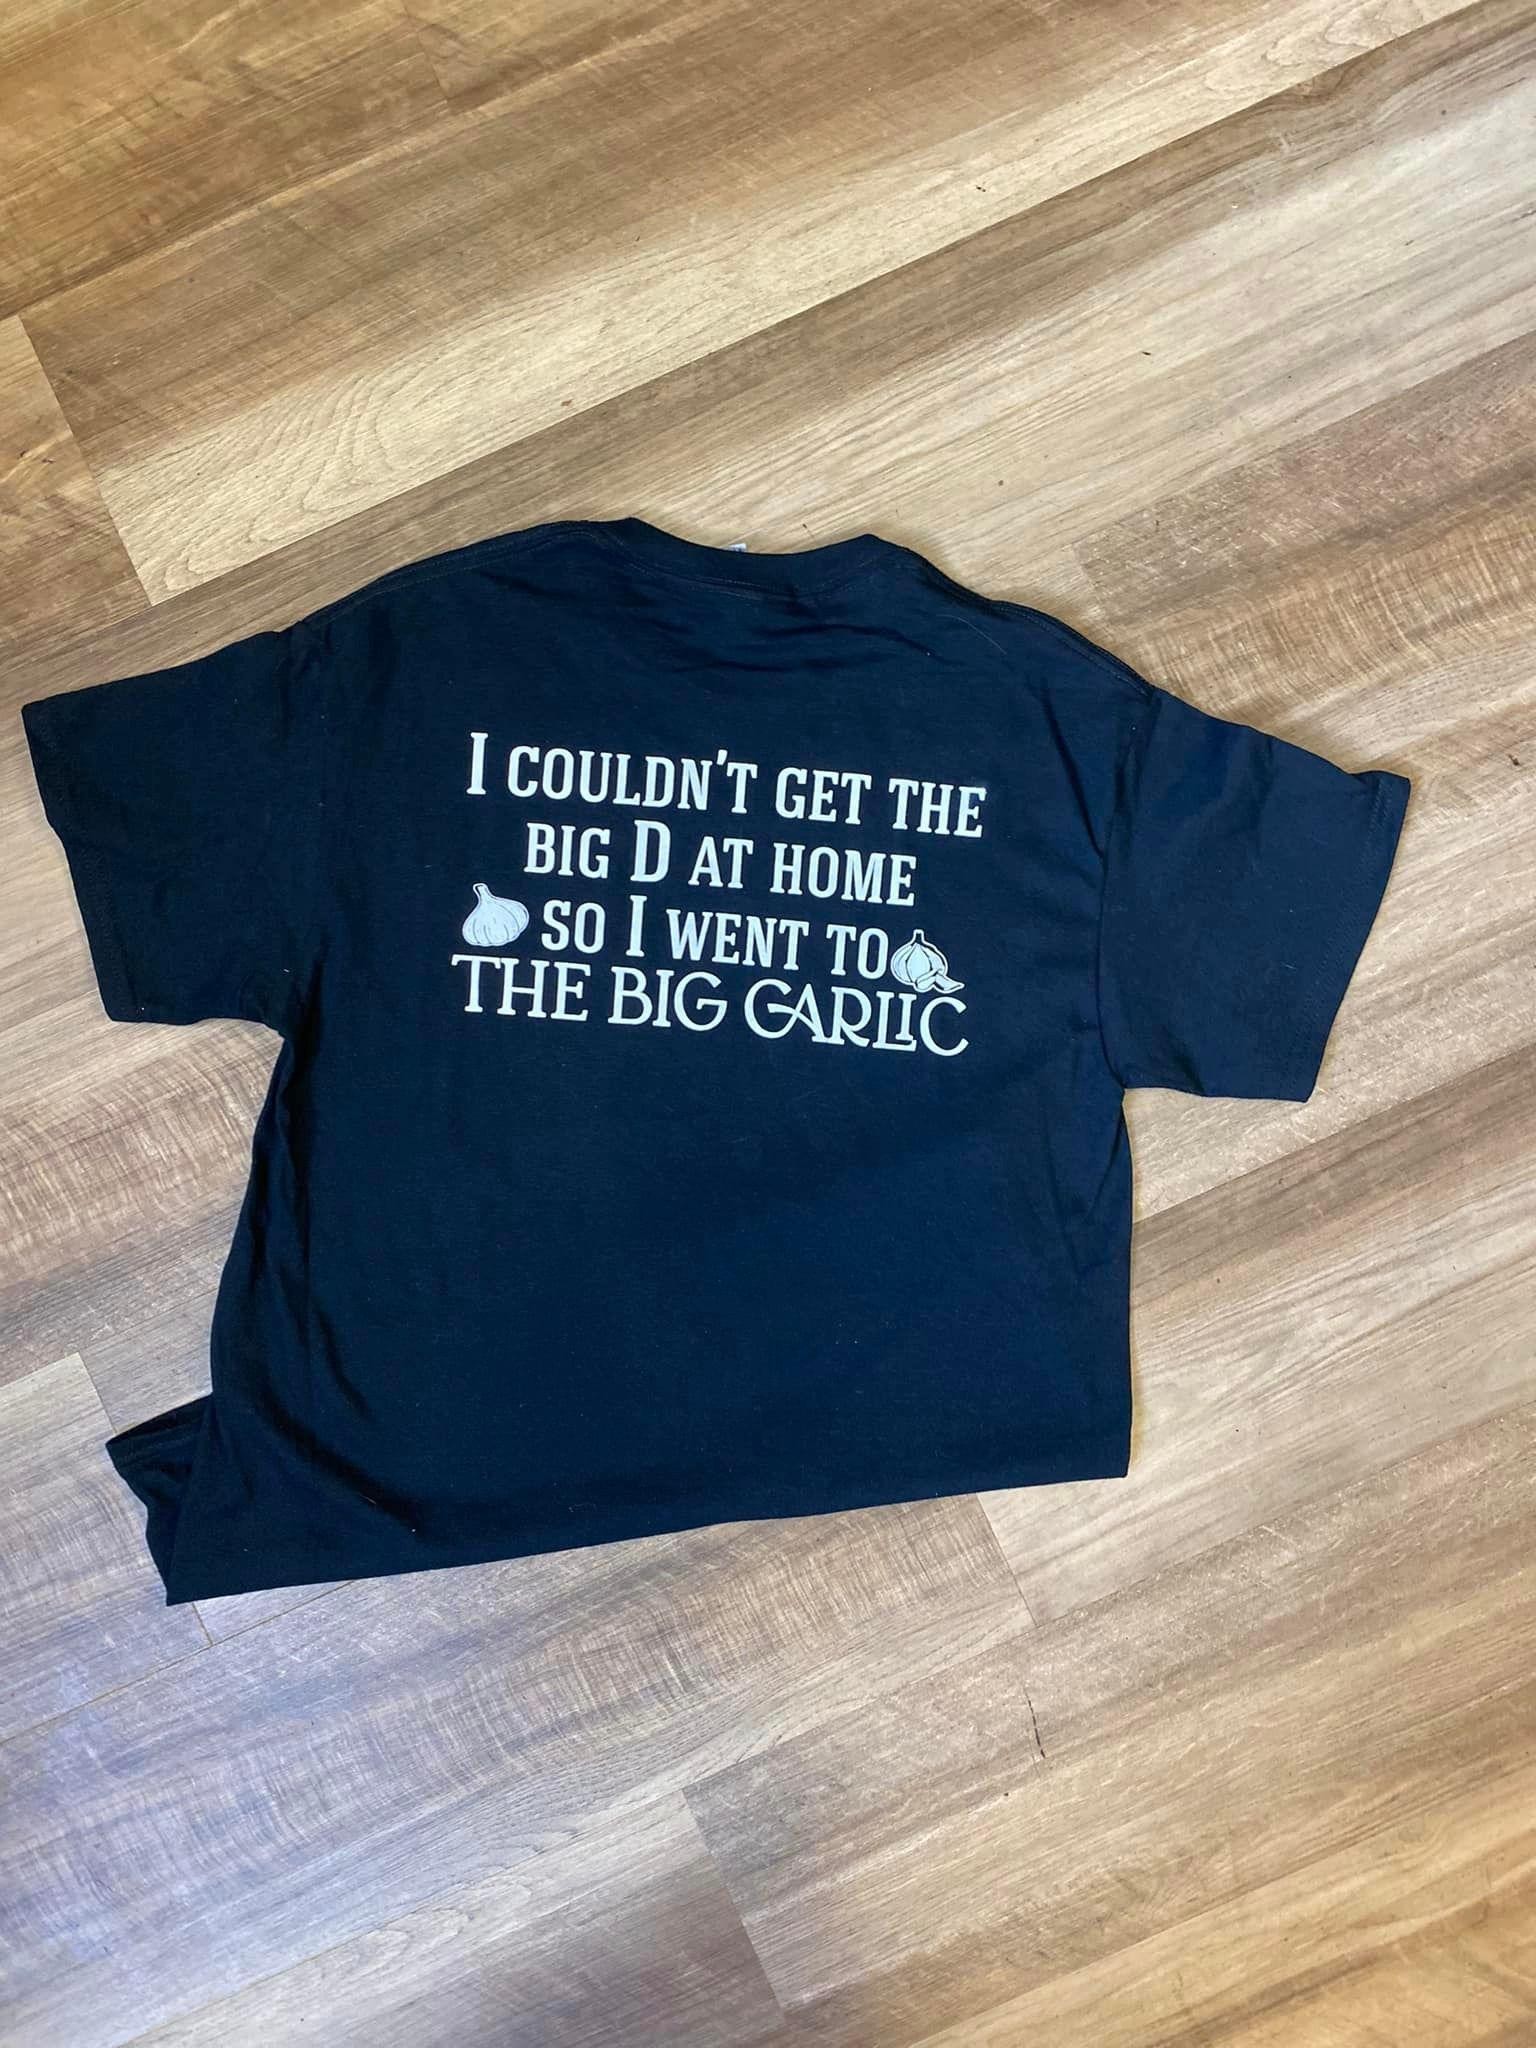 I Couldn't Get The Big D at Home so I went to The Big Garlic